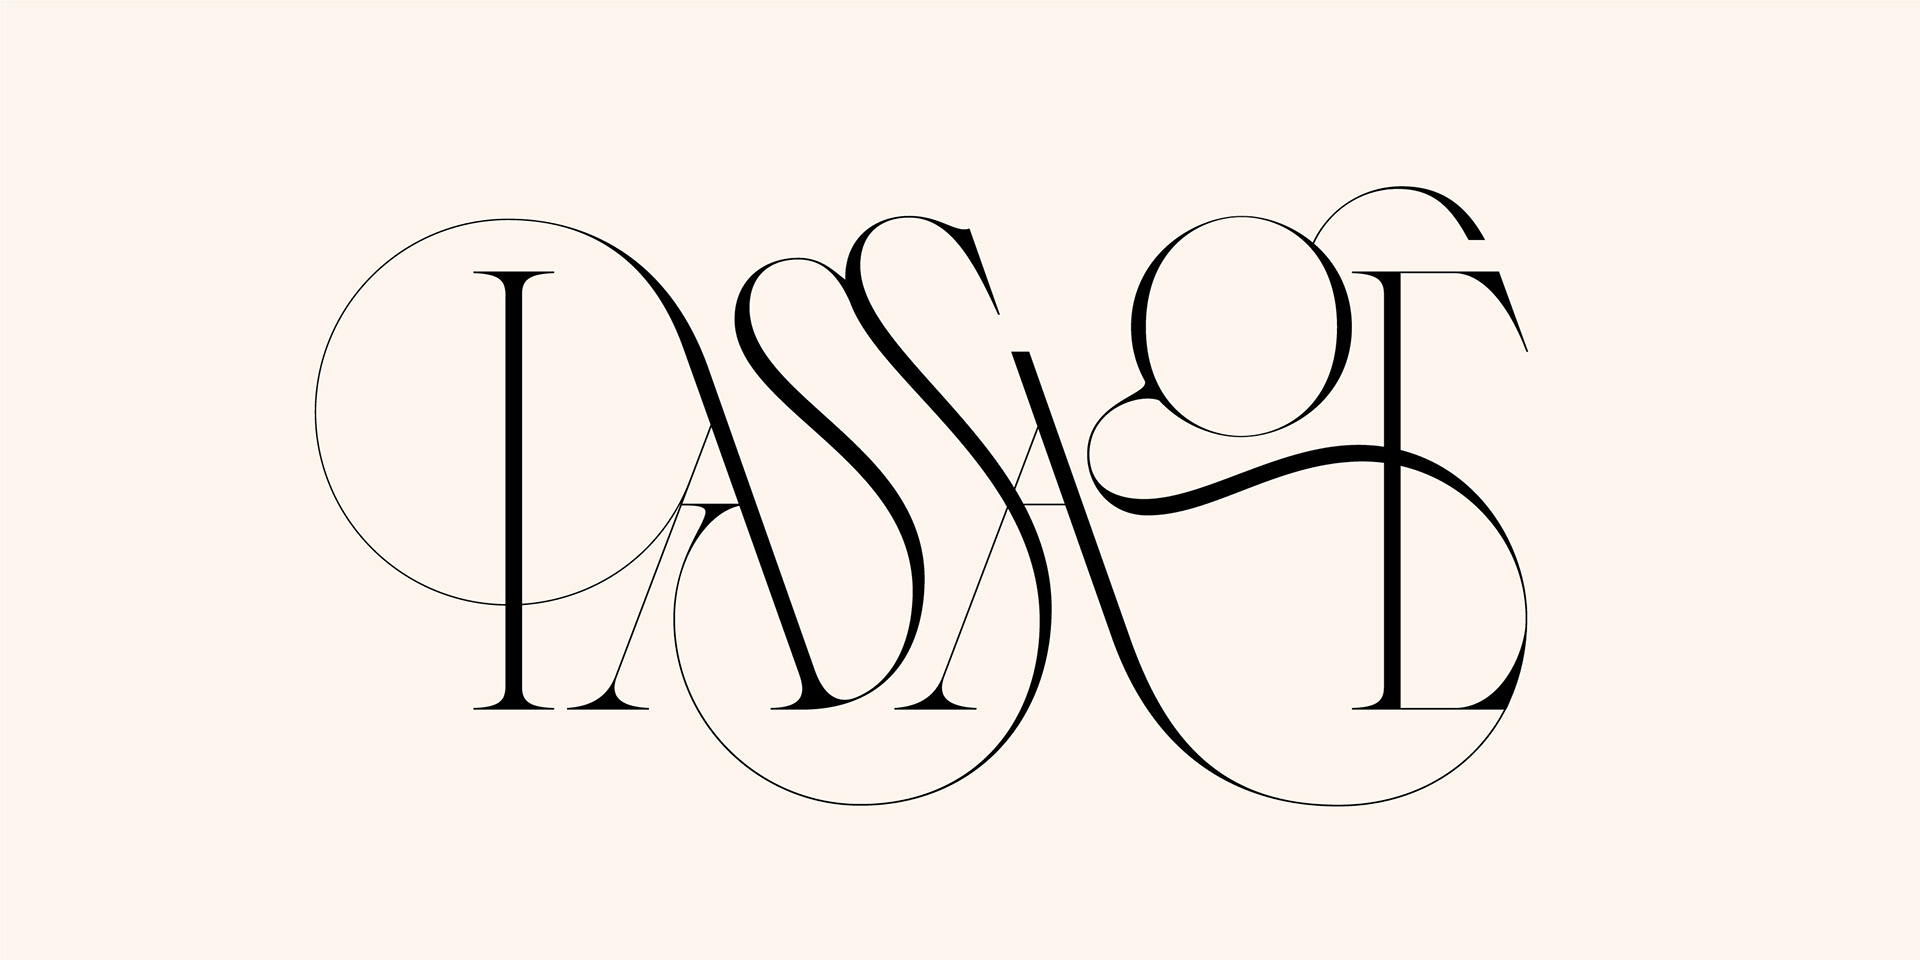 Typography,Graphic Design,Calligraphy